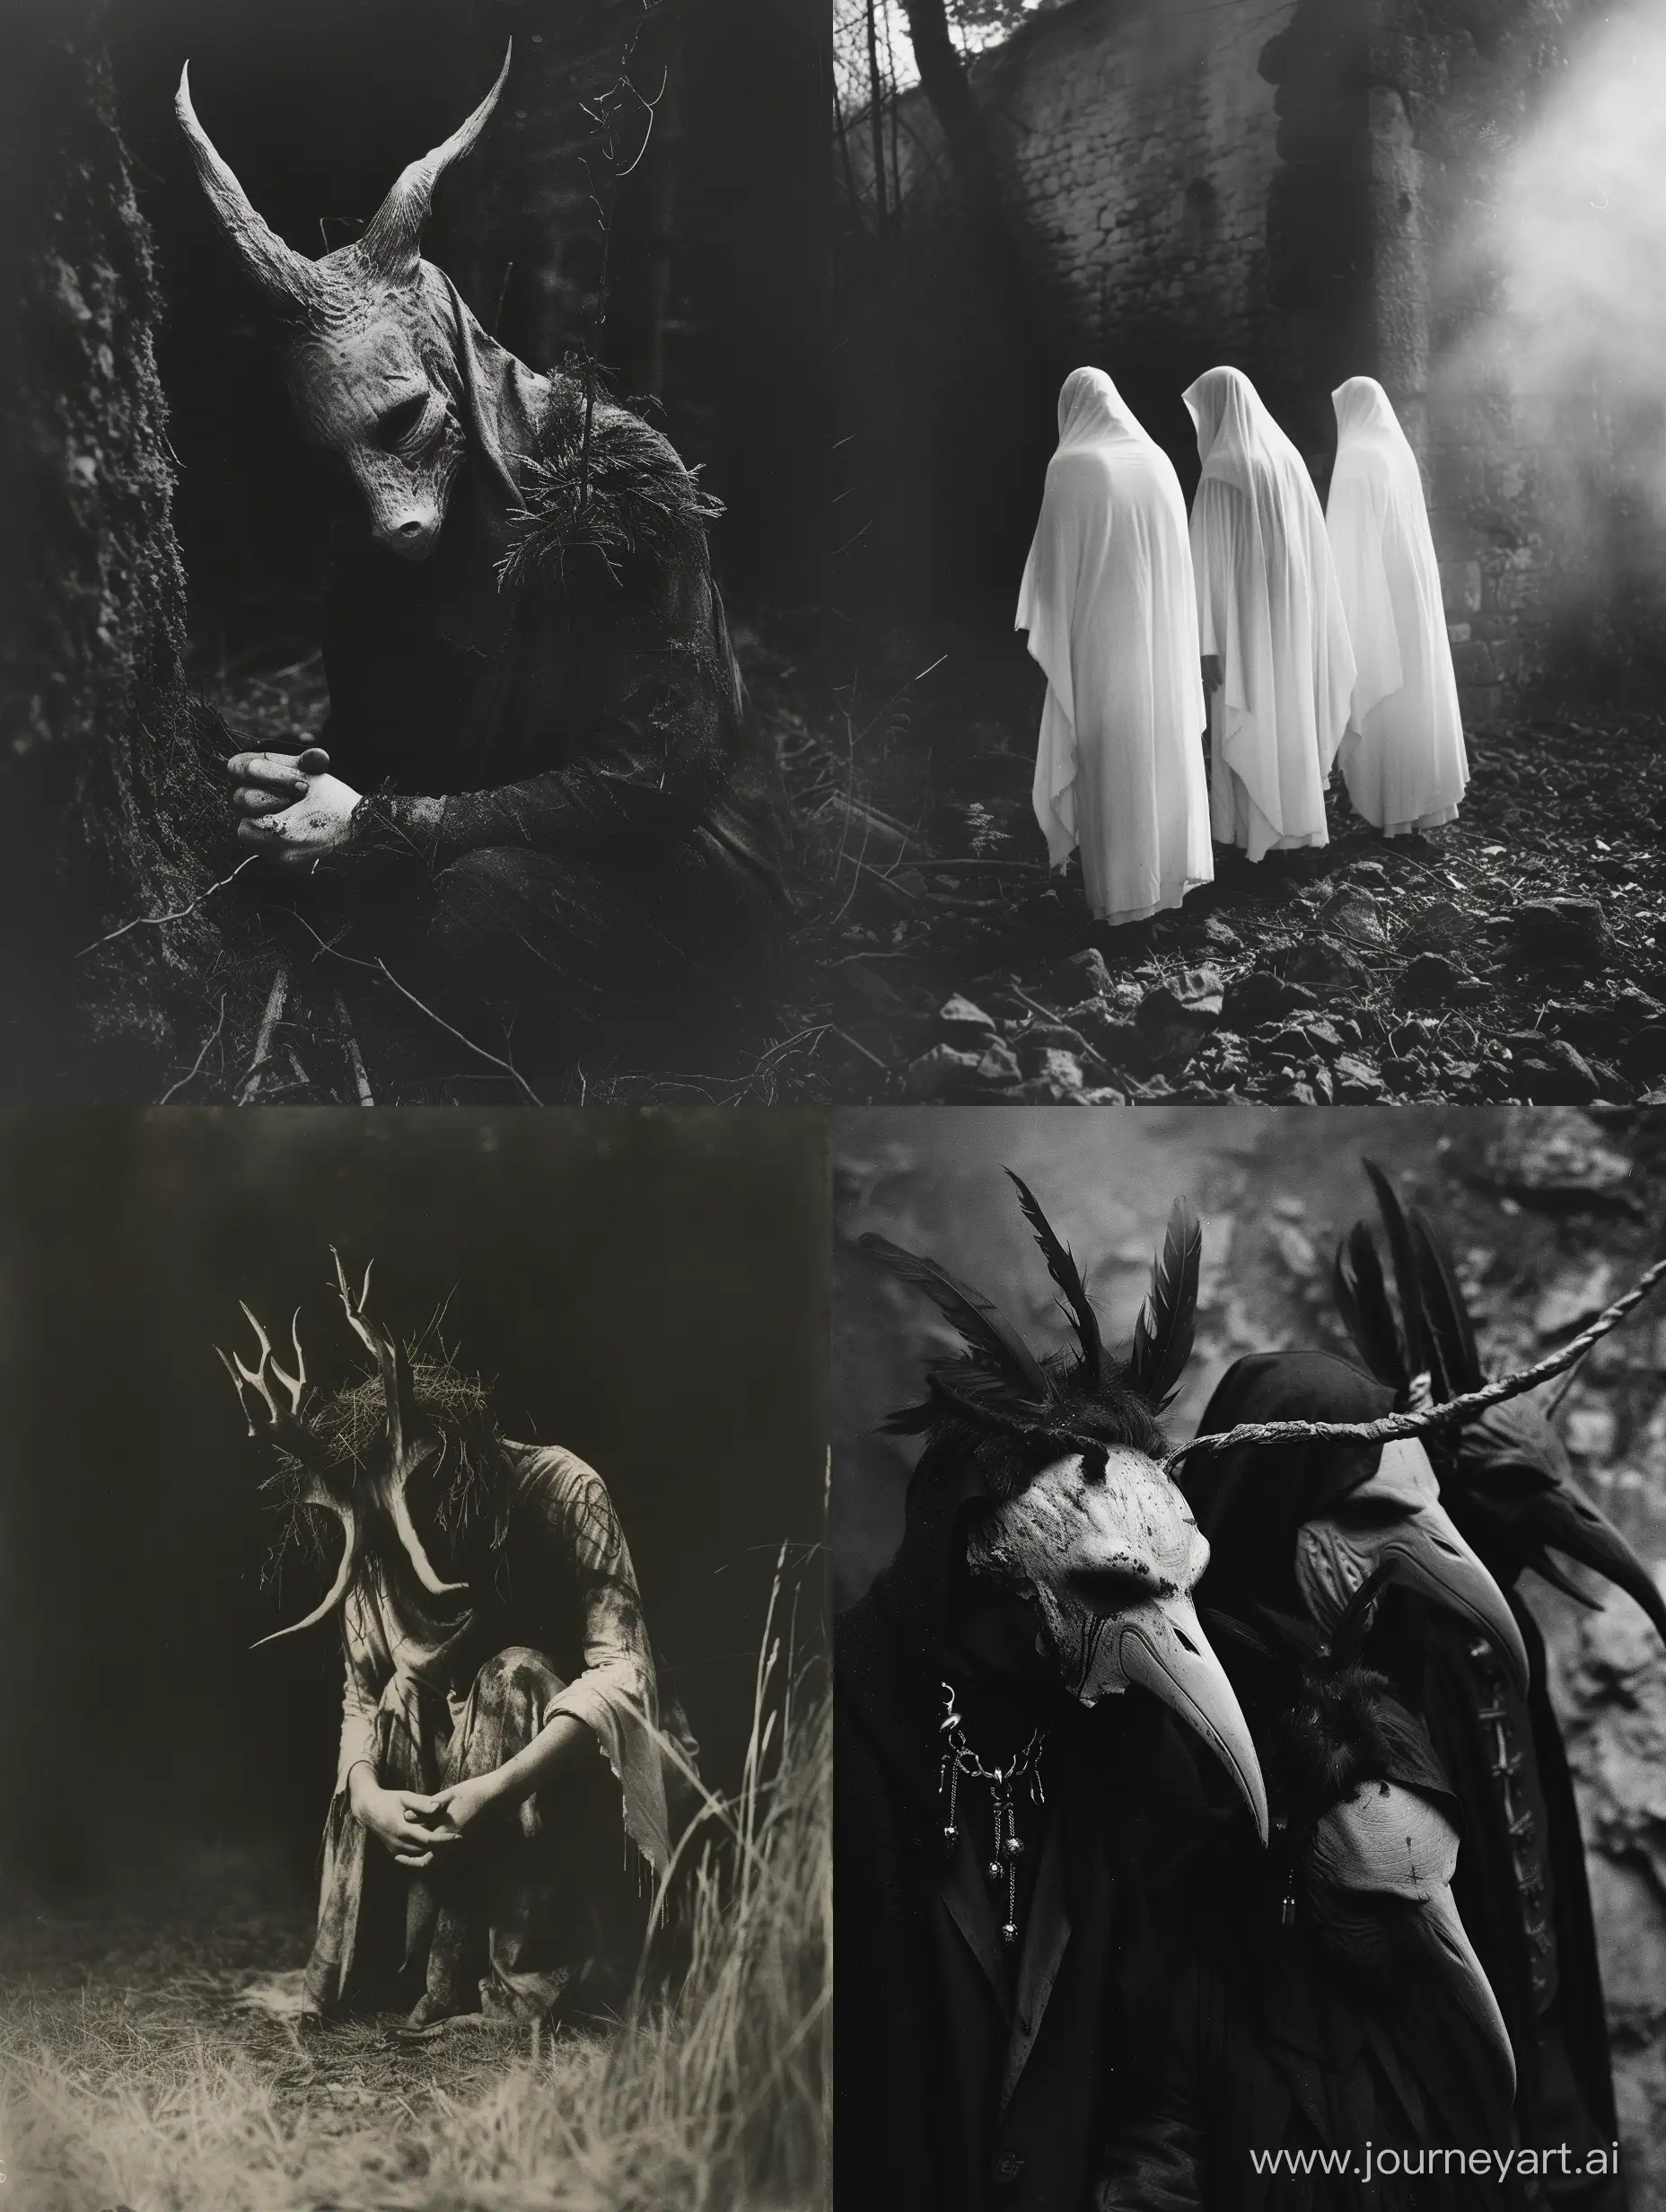 Ritualistic madness, horror core, pagan horror, dark horror, film photography, Dark synth, Tom bagshaw, Glenn Fabry, Pierre Huyghe, expired 35mm film